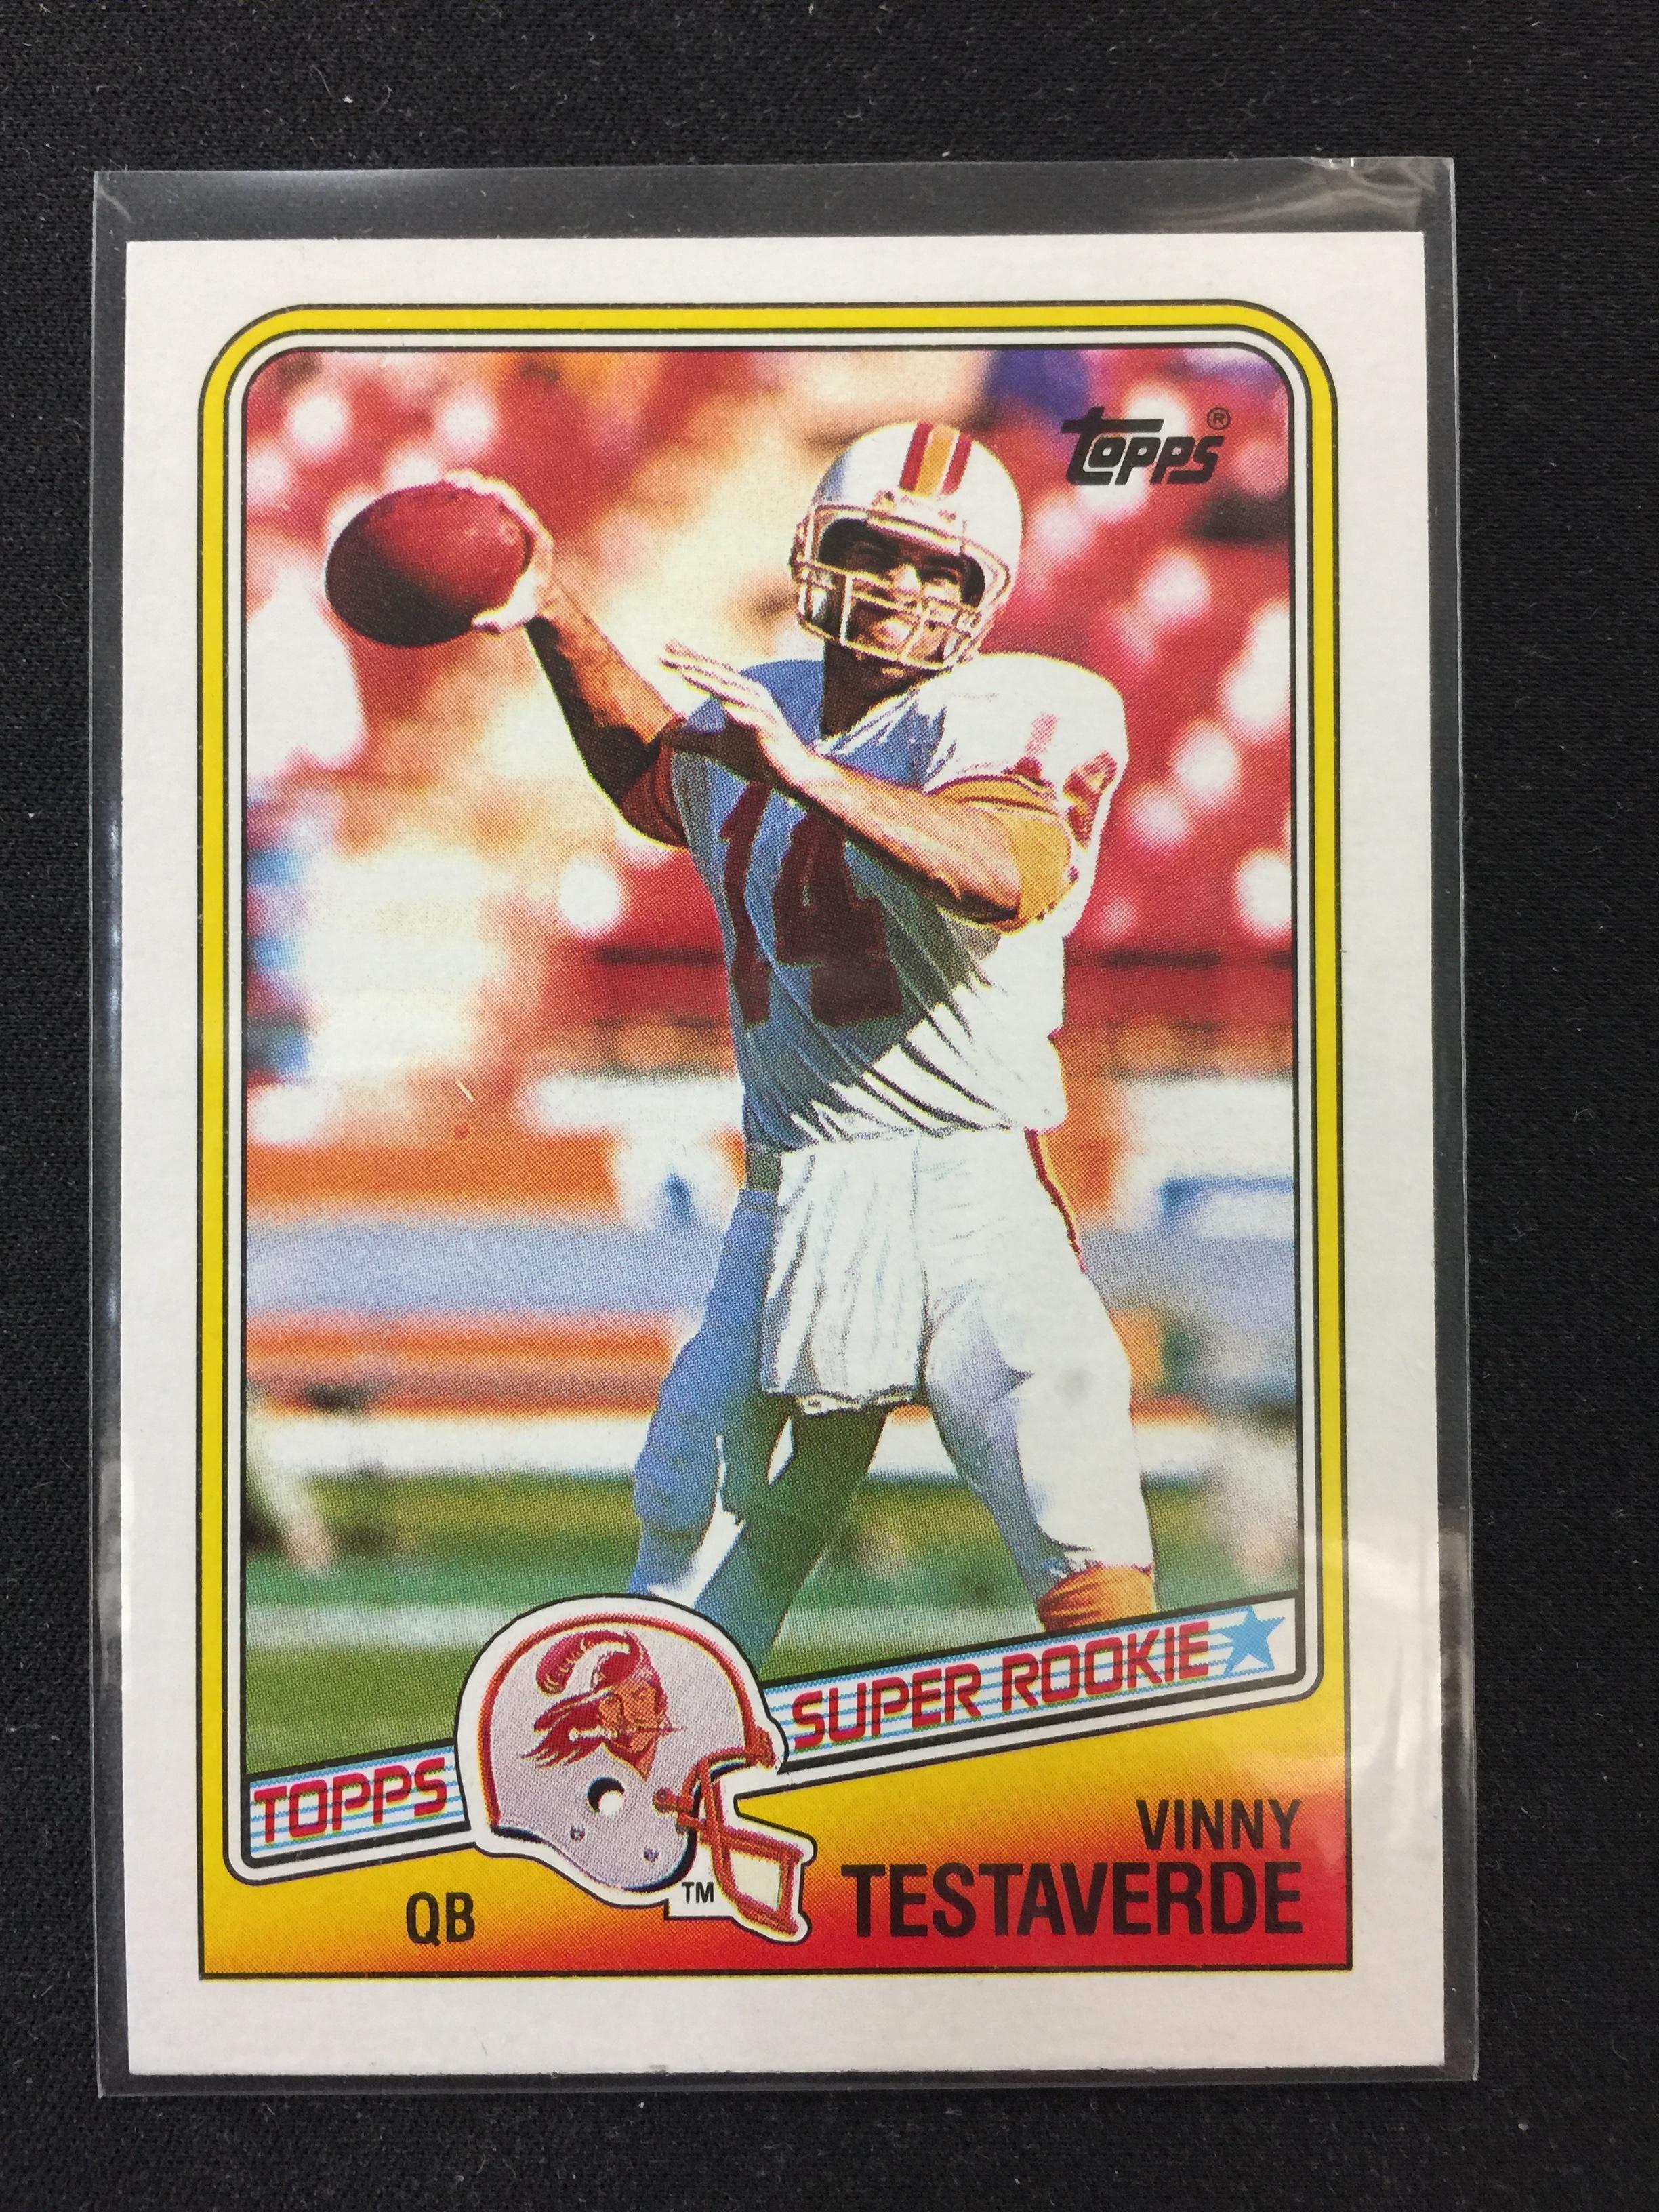 1988 Topps #352 Vinny Testaverde Bucs Jets Rookie Football Card